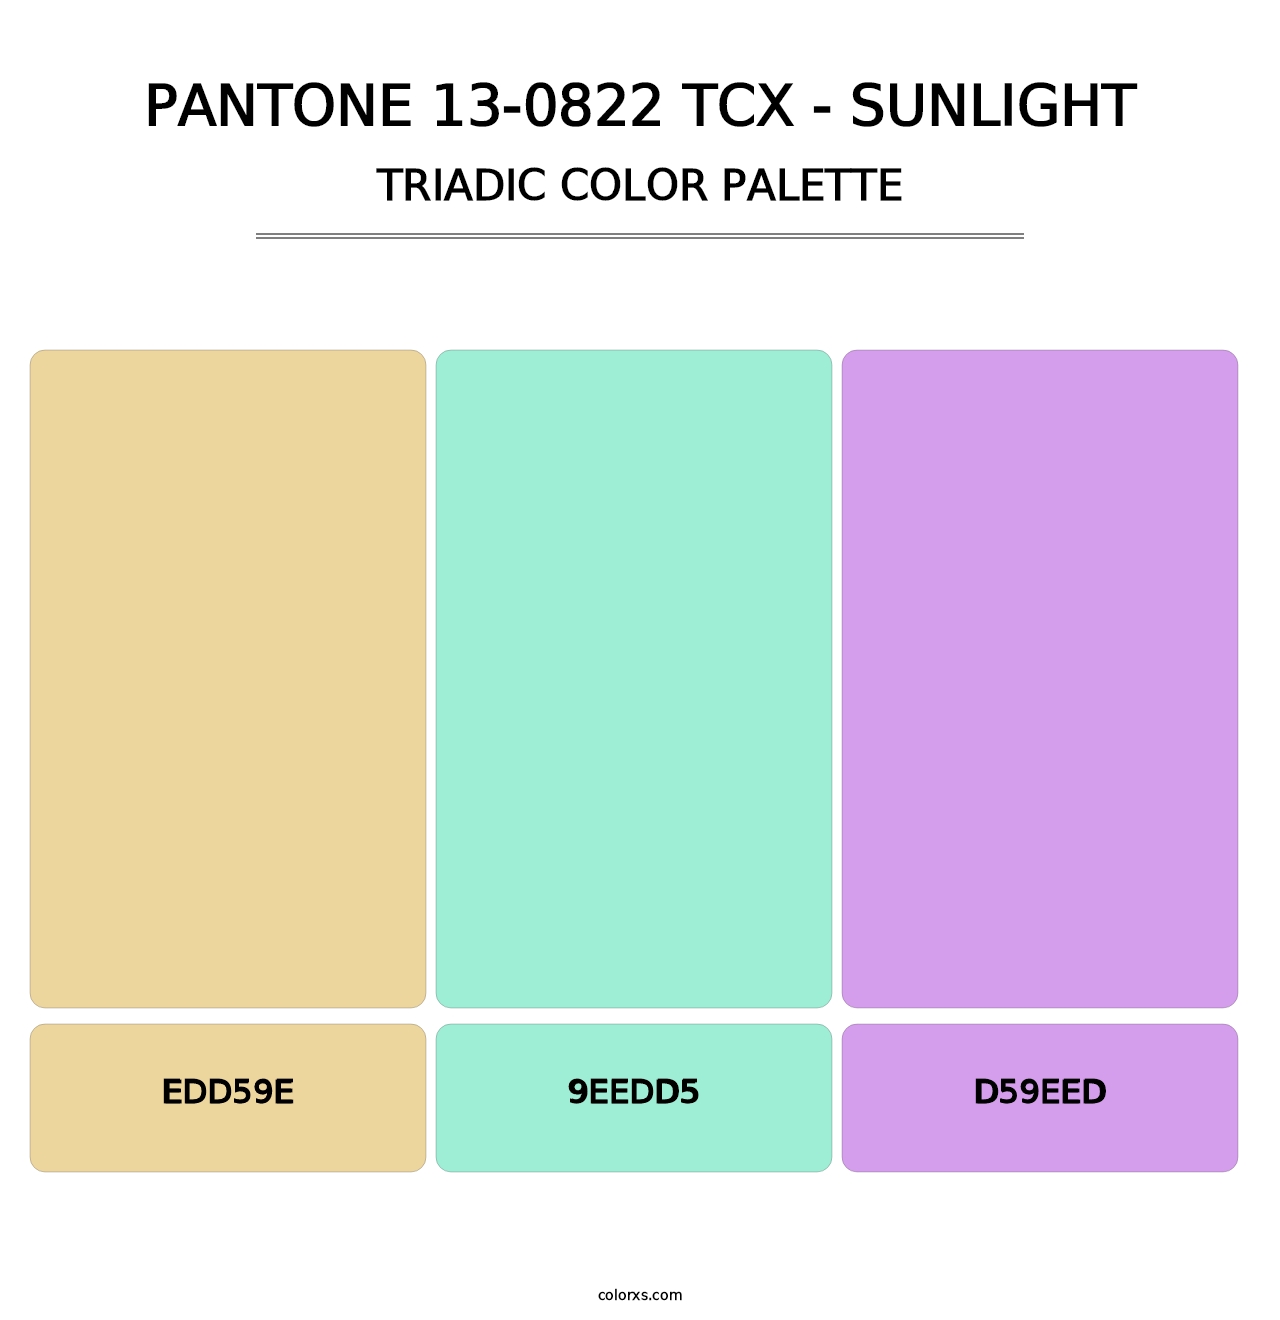 PANTONE 13-0822 TCX - Sunlight - Triadic Color Palette